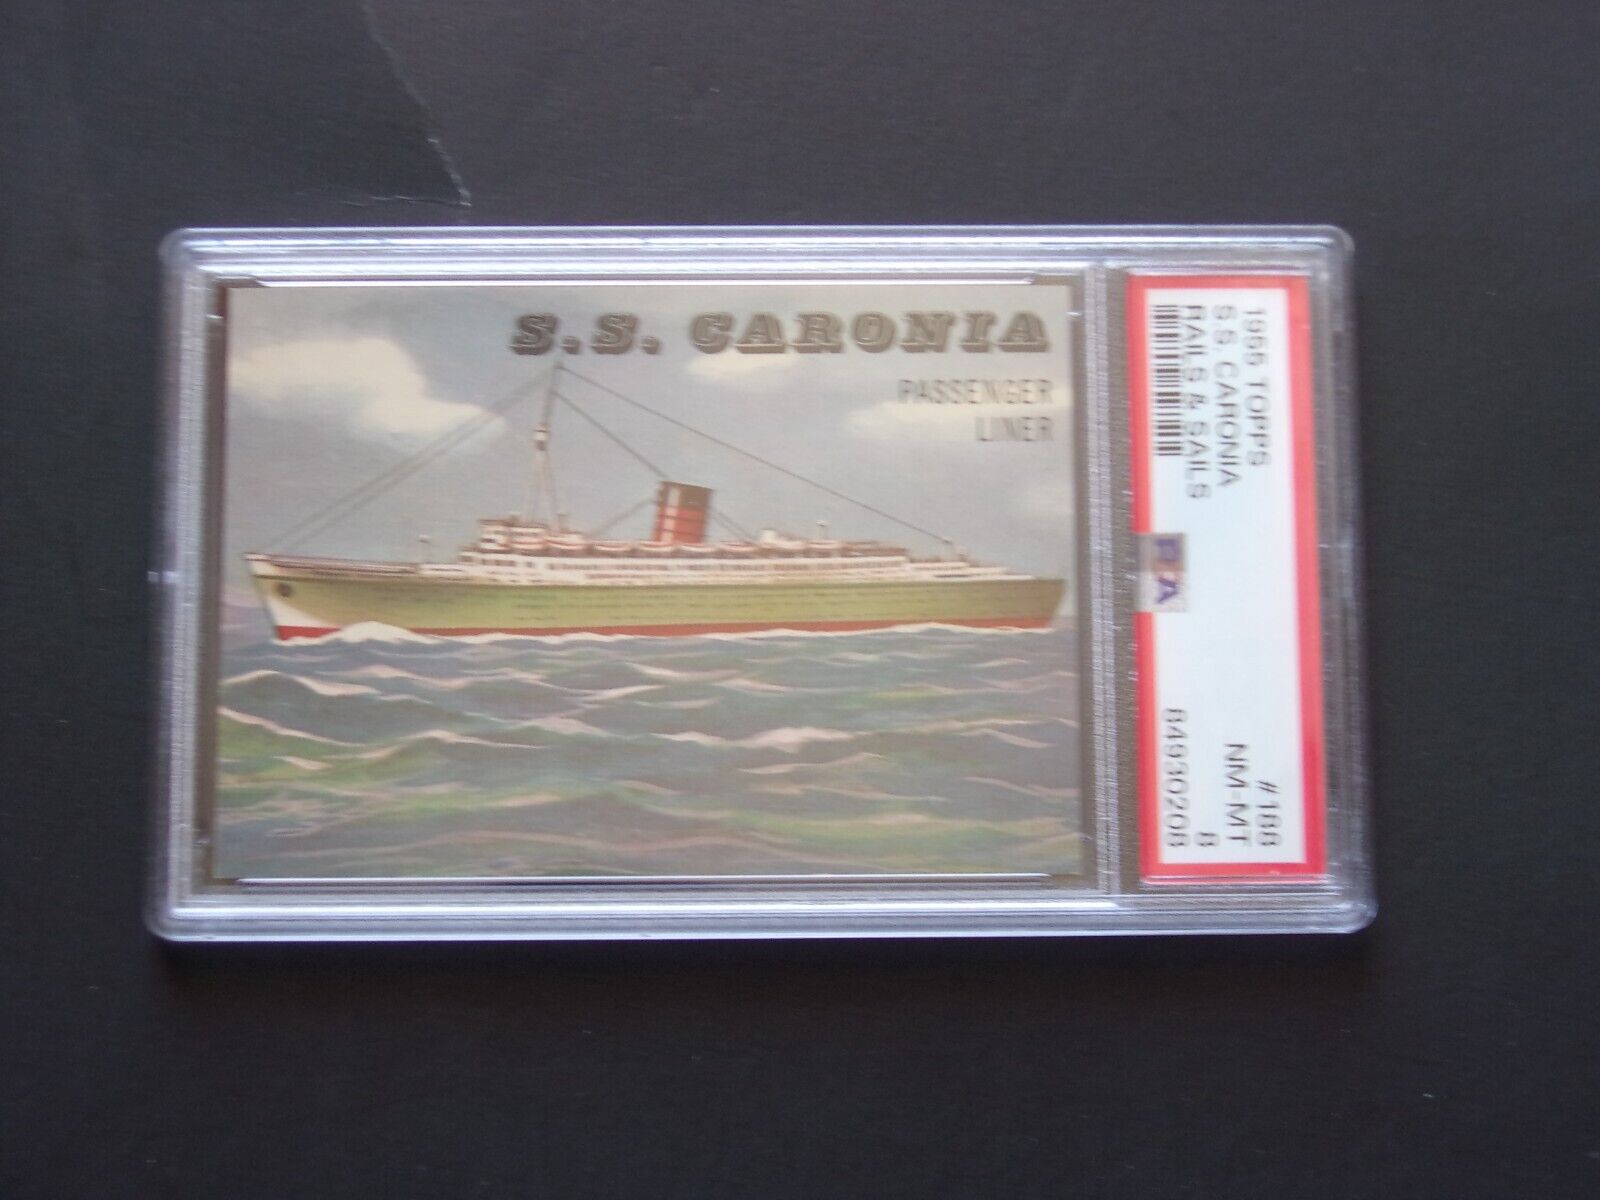 1955 Topps Rails & Sails, S.S. Caronia, Card# 188, PSA-8